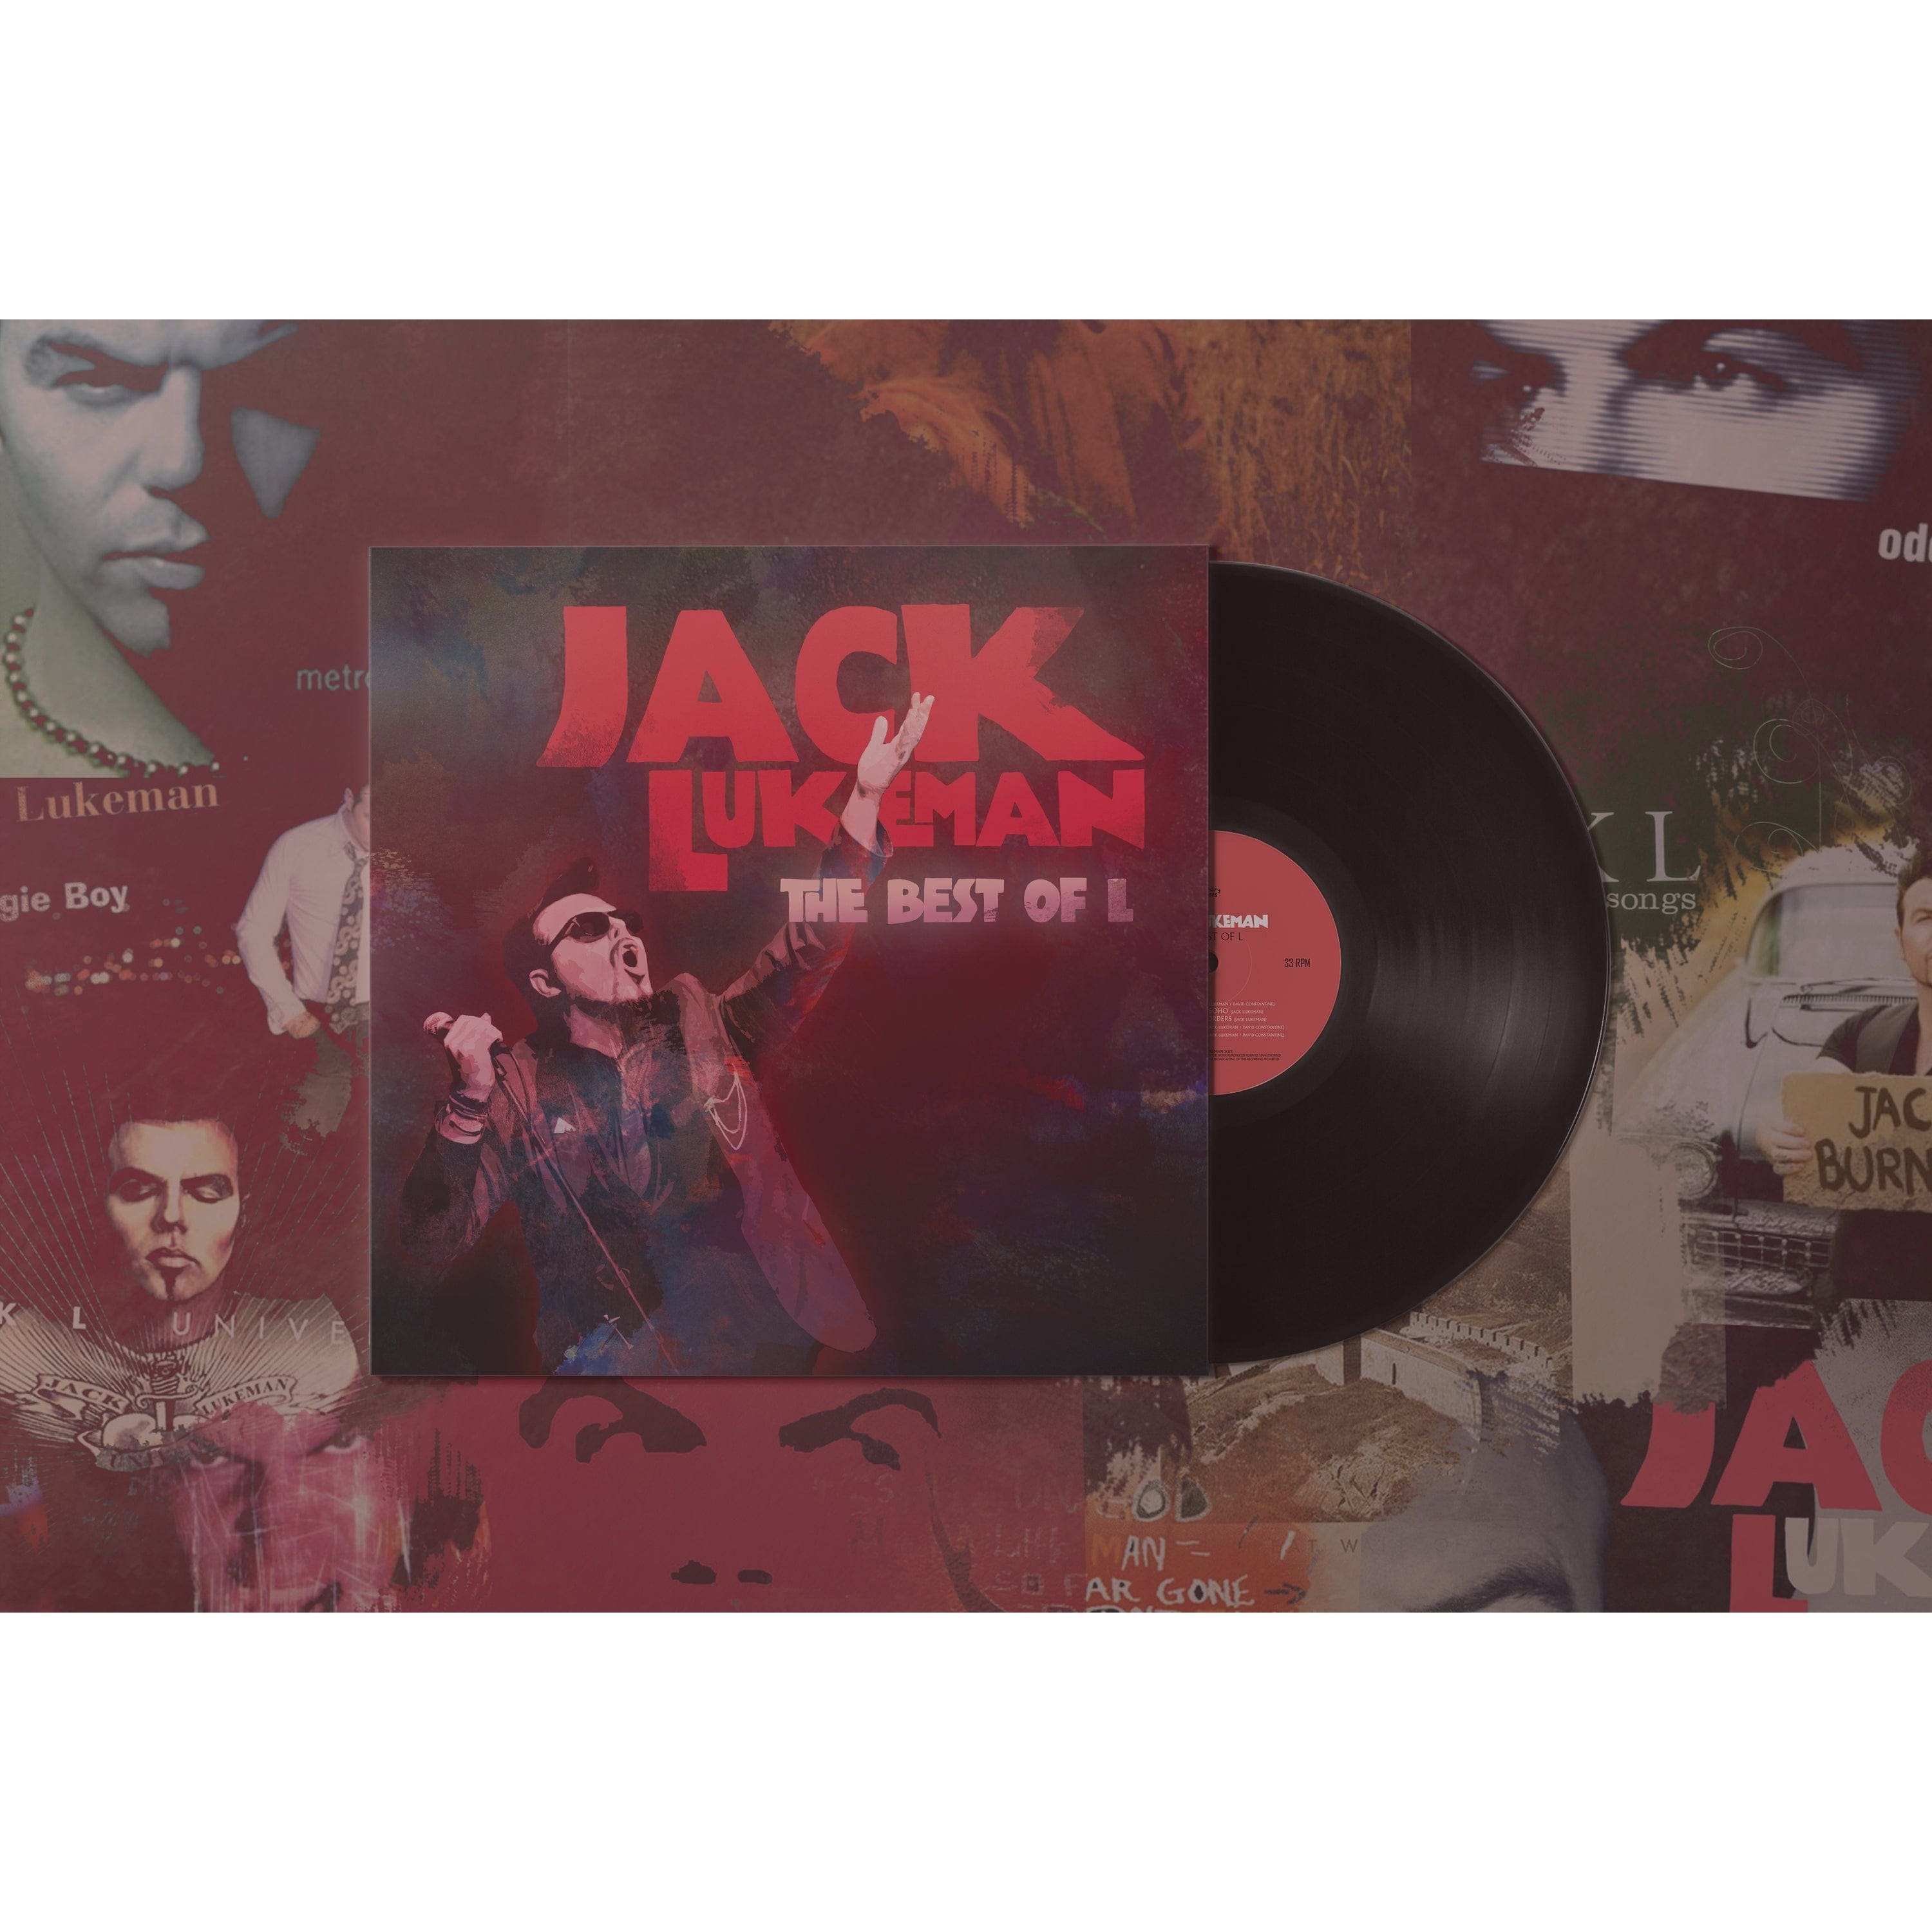 The Best of L - Jack Lukeman [Vinyl]